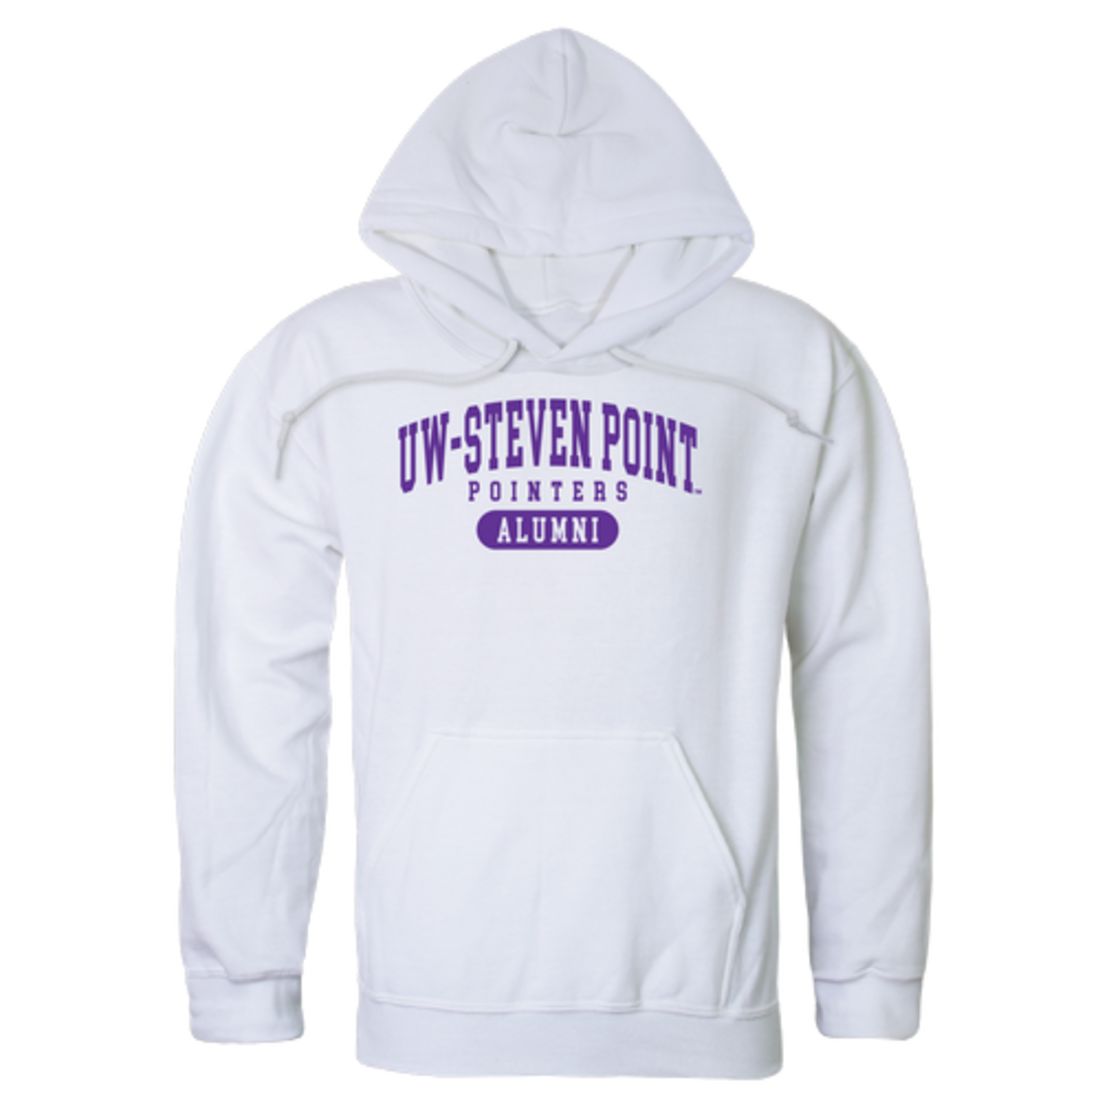 UWSP University of Wisconsin Stevens Point Pointers Alumni Fleece Hoodie Sweatshirts Heather Charcoal-Campus-Wardrobe